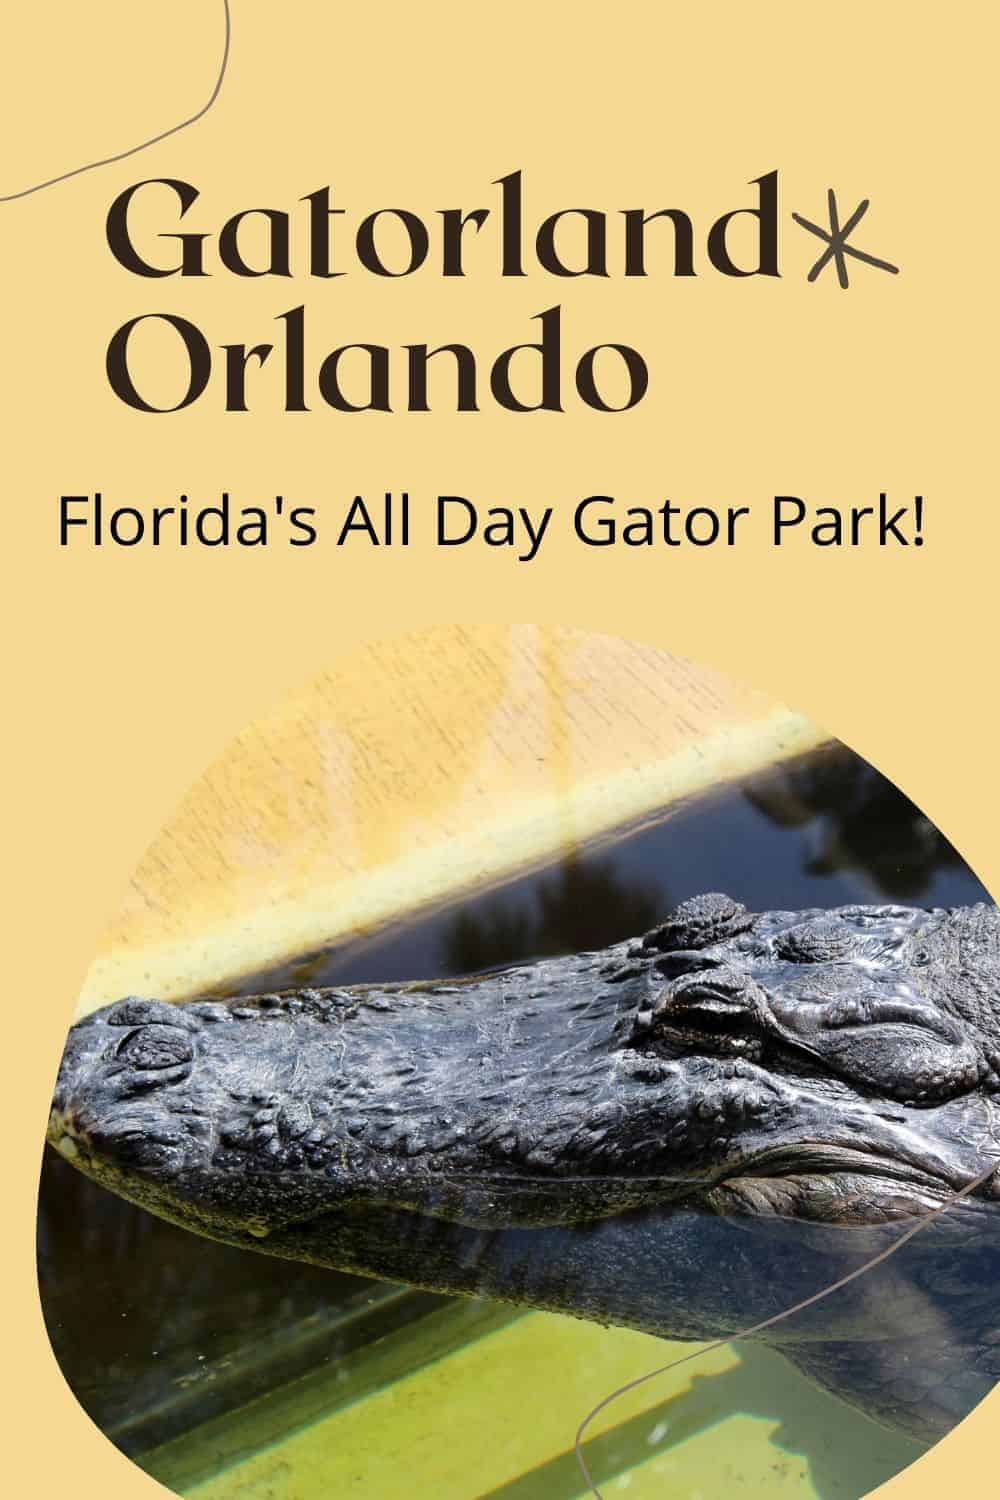 Gatorland Orlando - Orlando's All day alligator attraction complete with alligator feeding, zip lining over an alligator enclosure, and over 3000 alligators! 